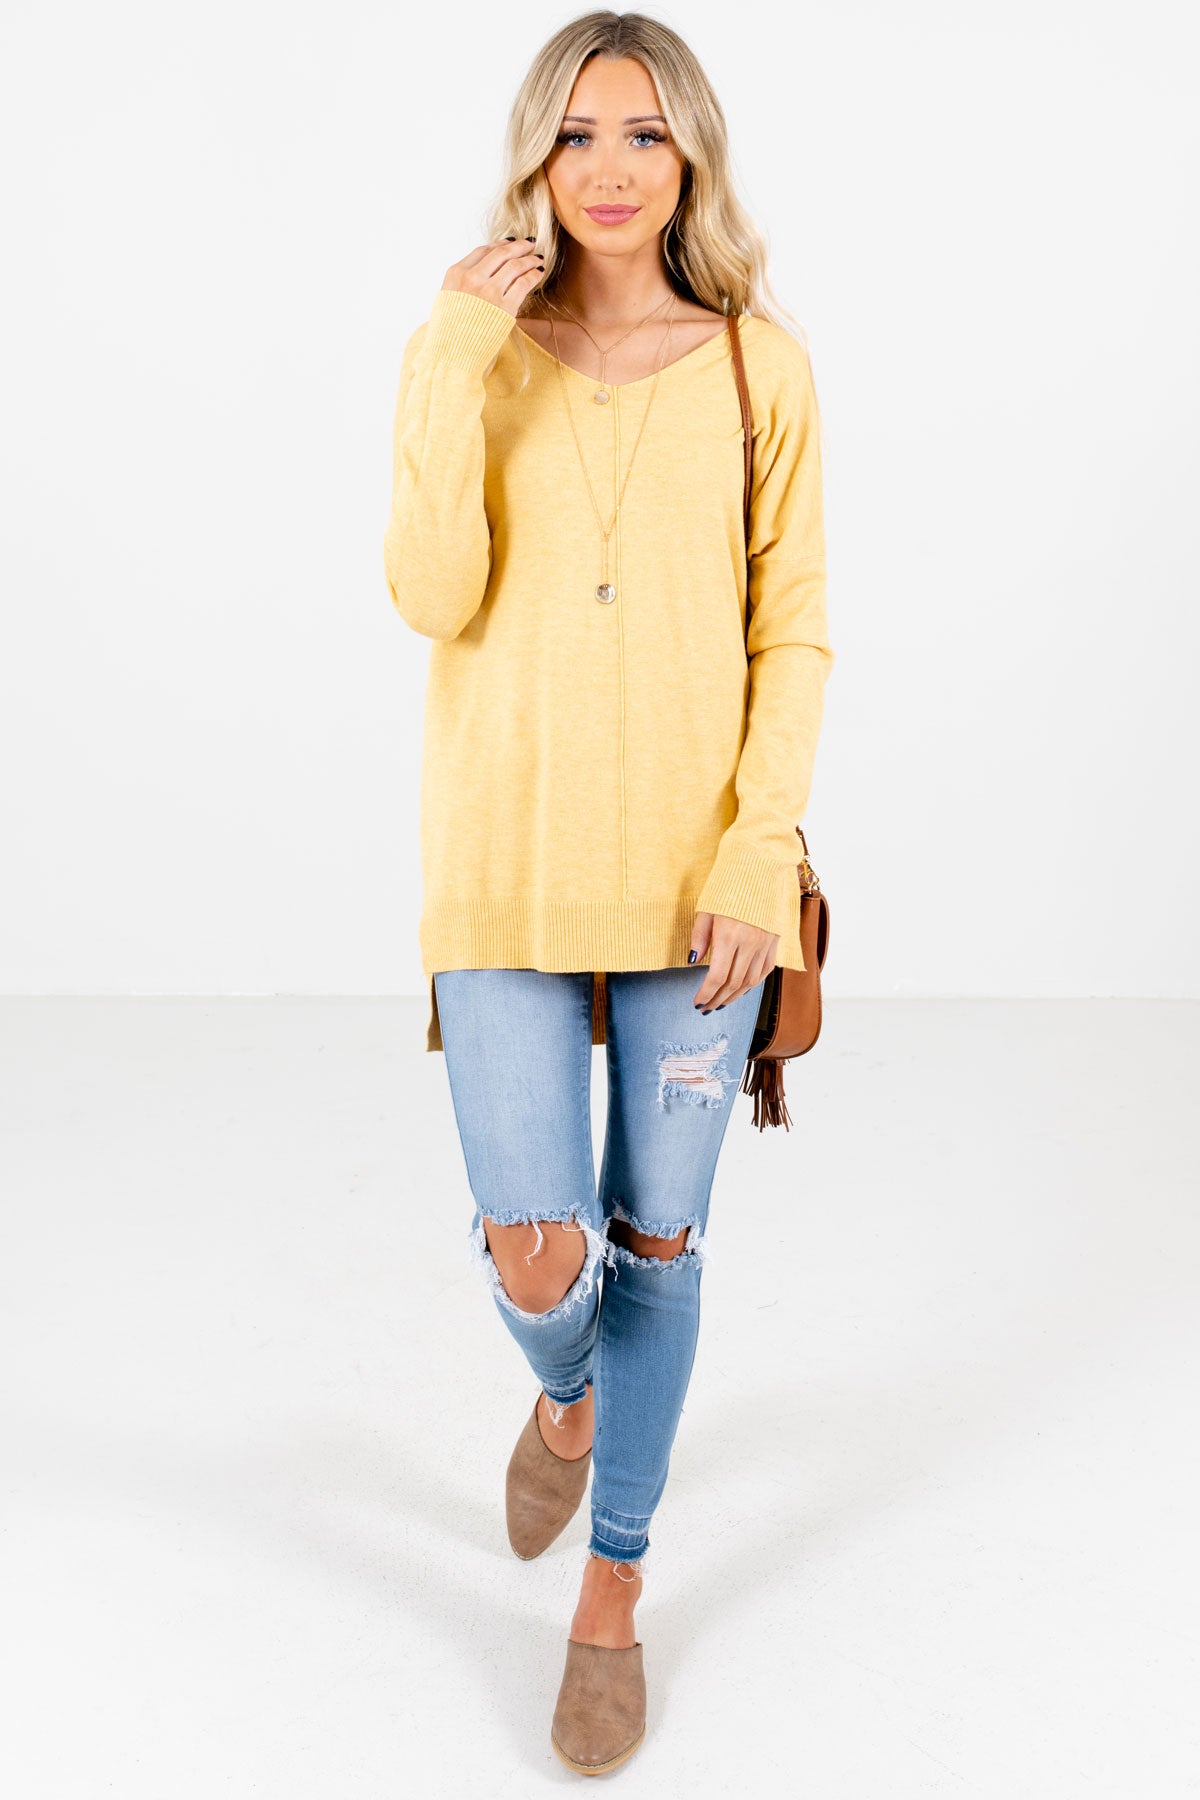 Choose Kindness Yellow Sweater